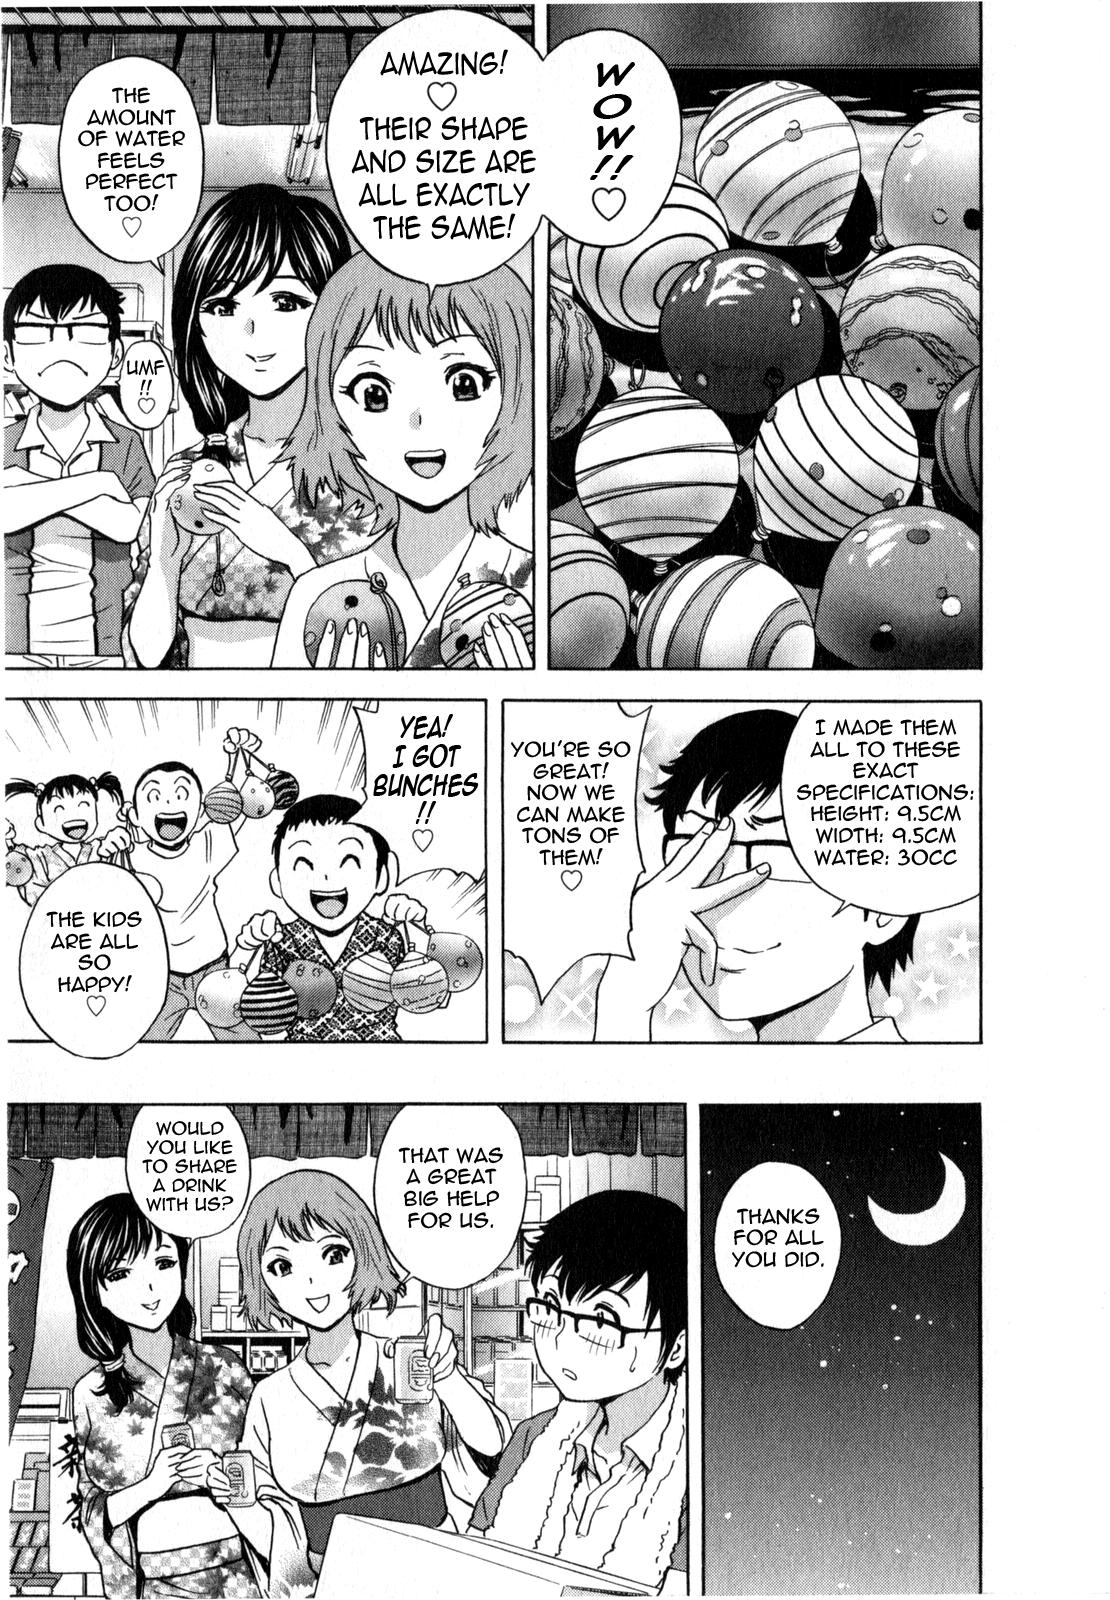 [Hidemaru] Life with Married Women Just Like a Manga 2 - Ch. 1-8 [English] {Tadanohito} 151